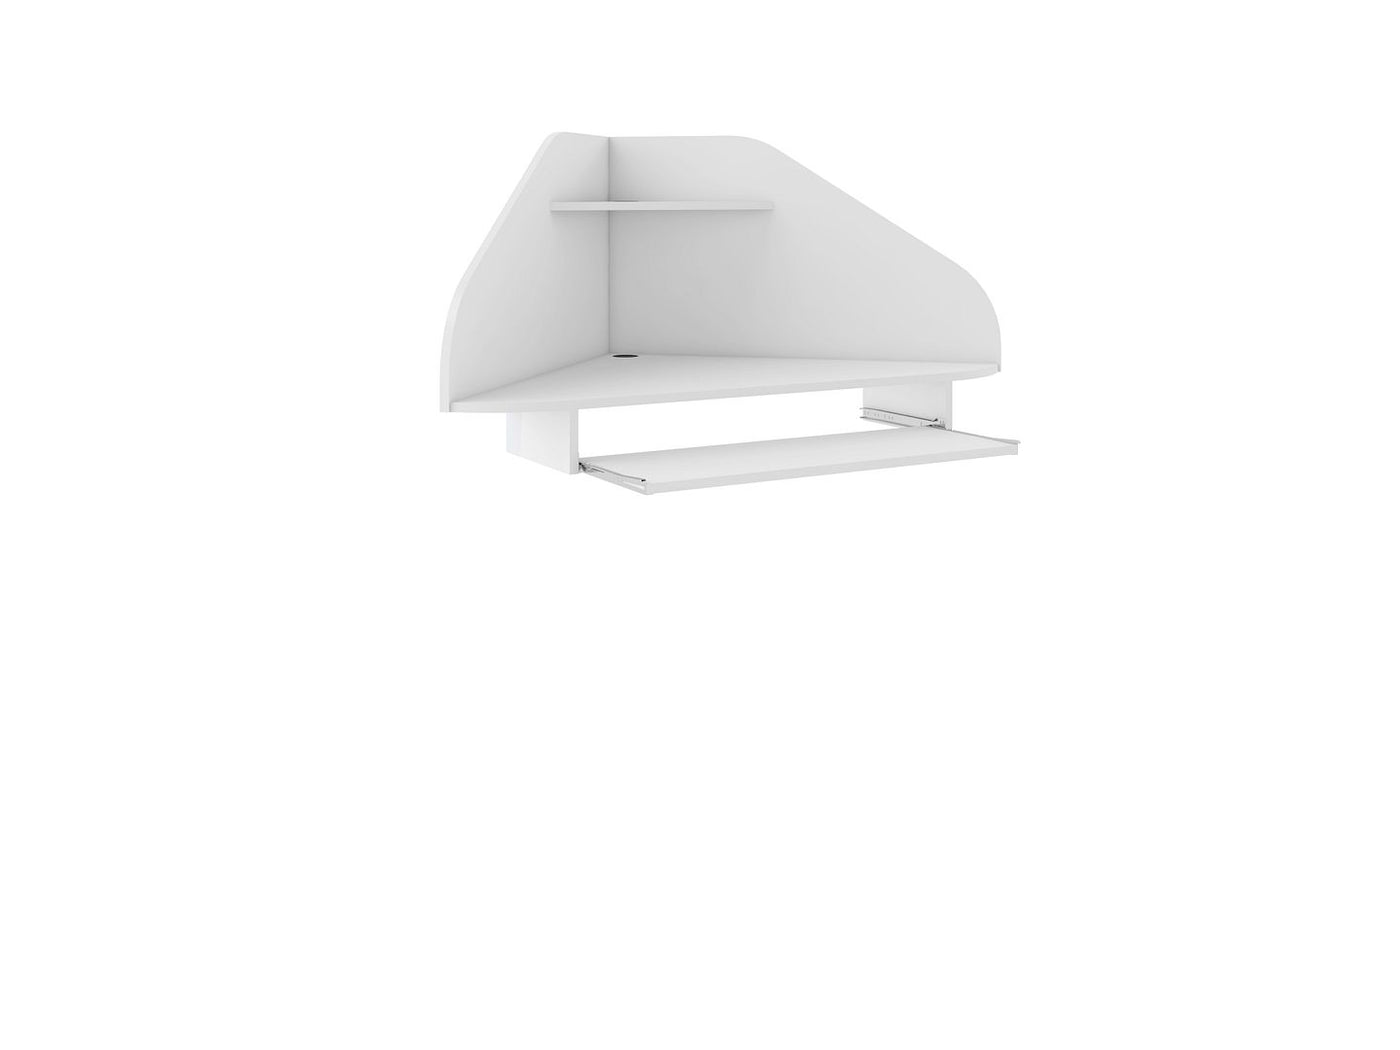 Gatutca Floating Corner Desk With Keyboard Shelf - White